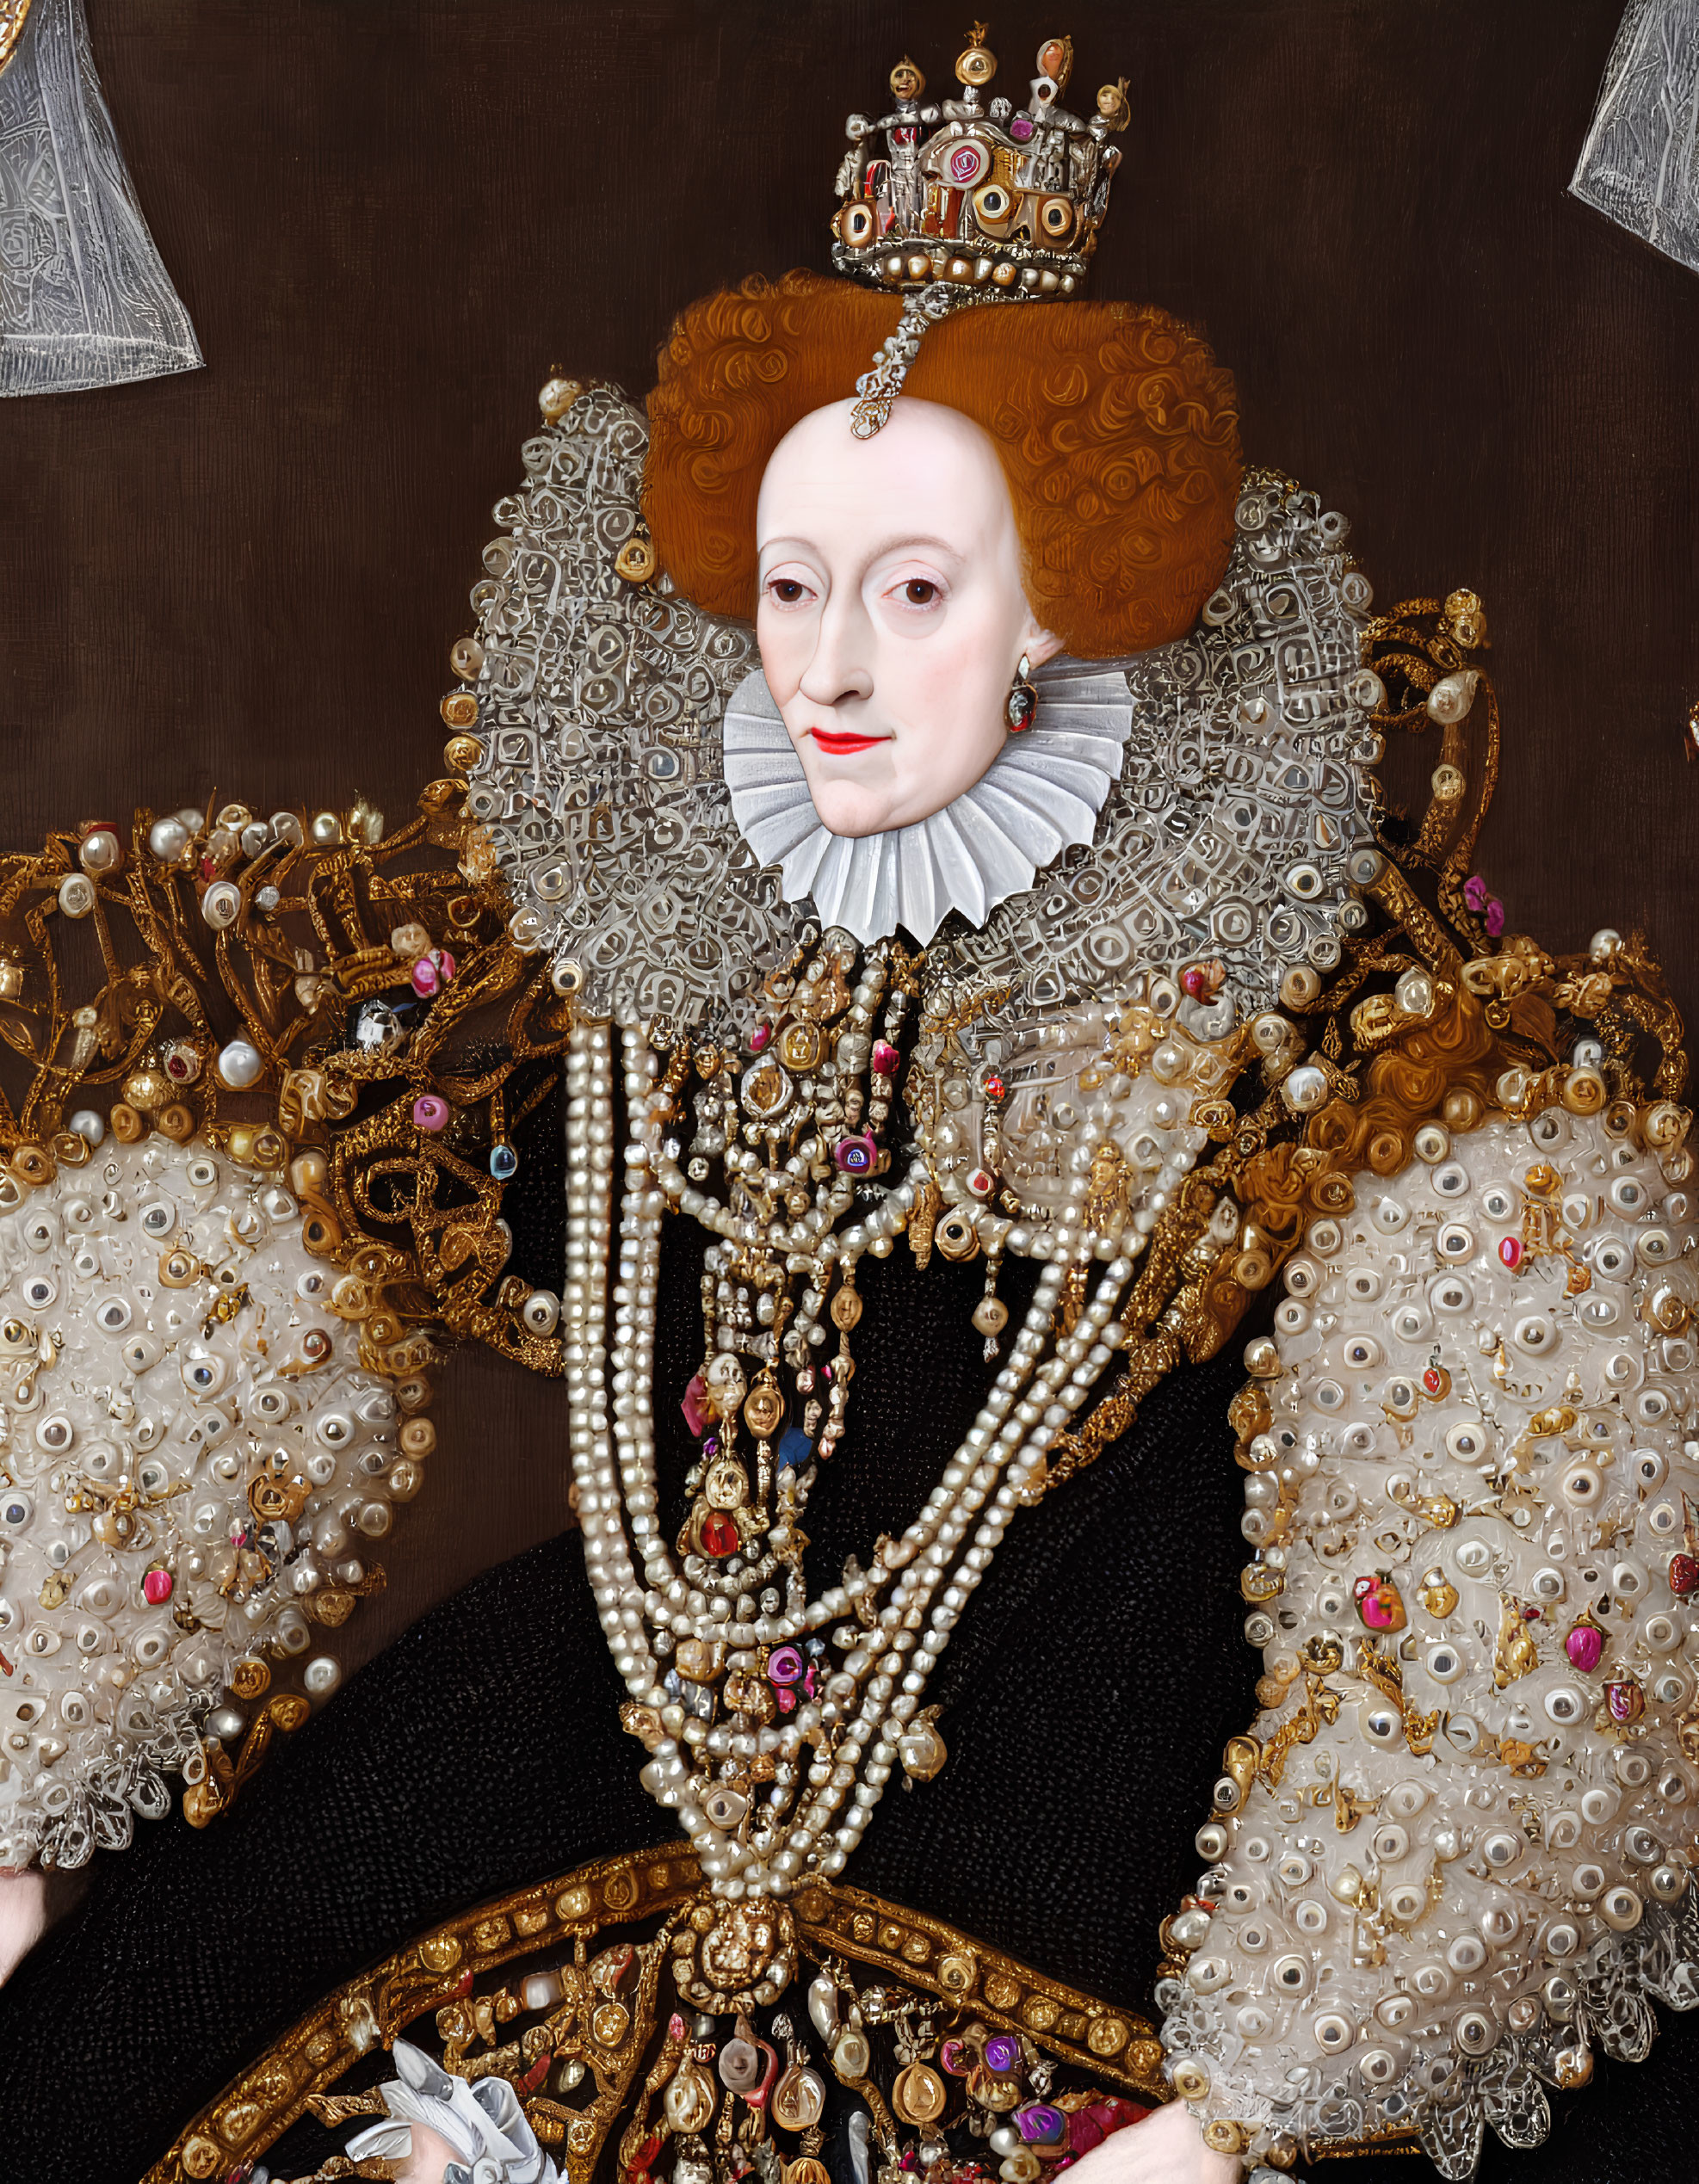 Elaborate Elizabethan-era woman portrait in pearls and stones